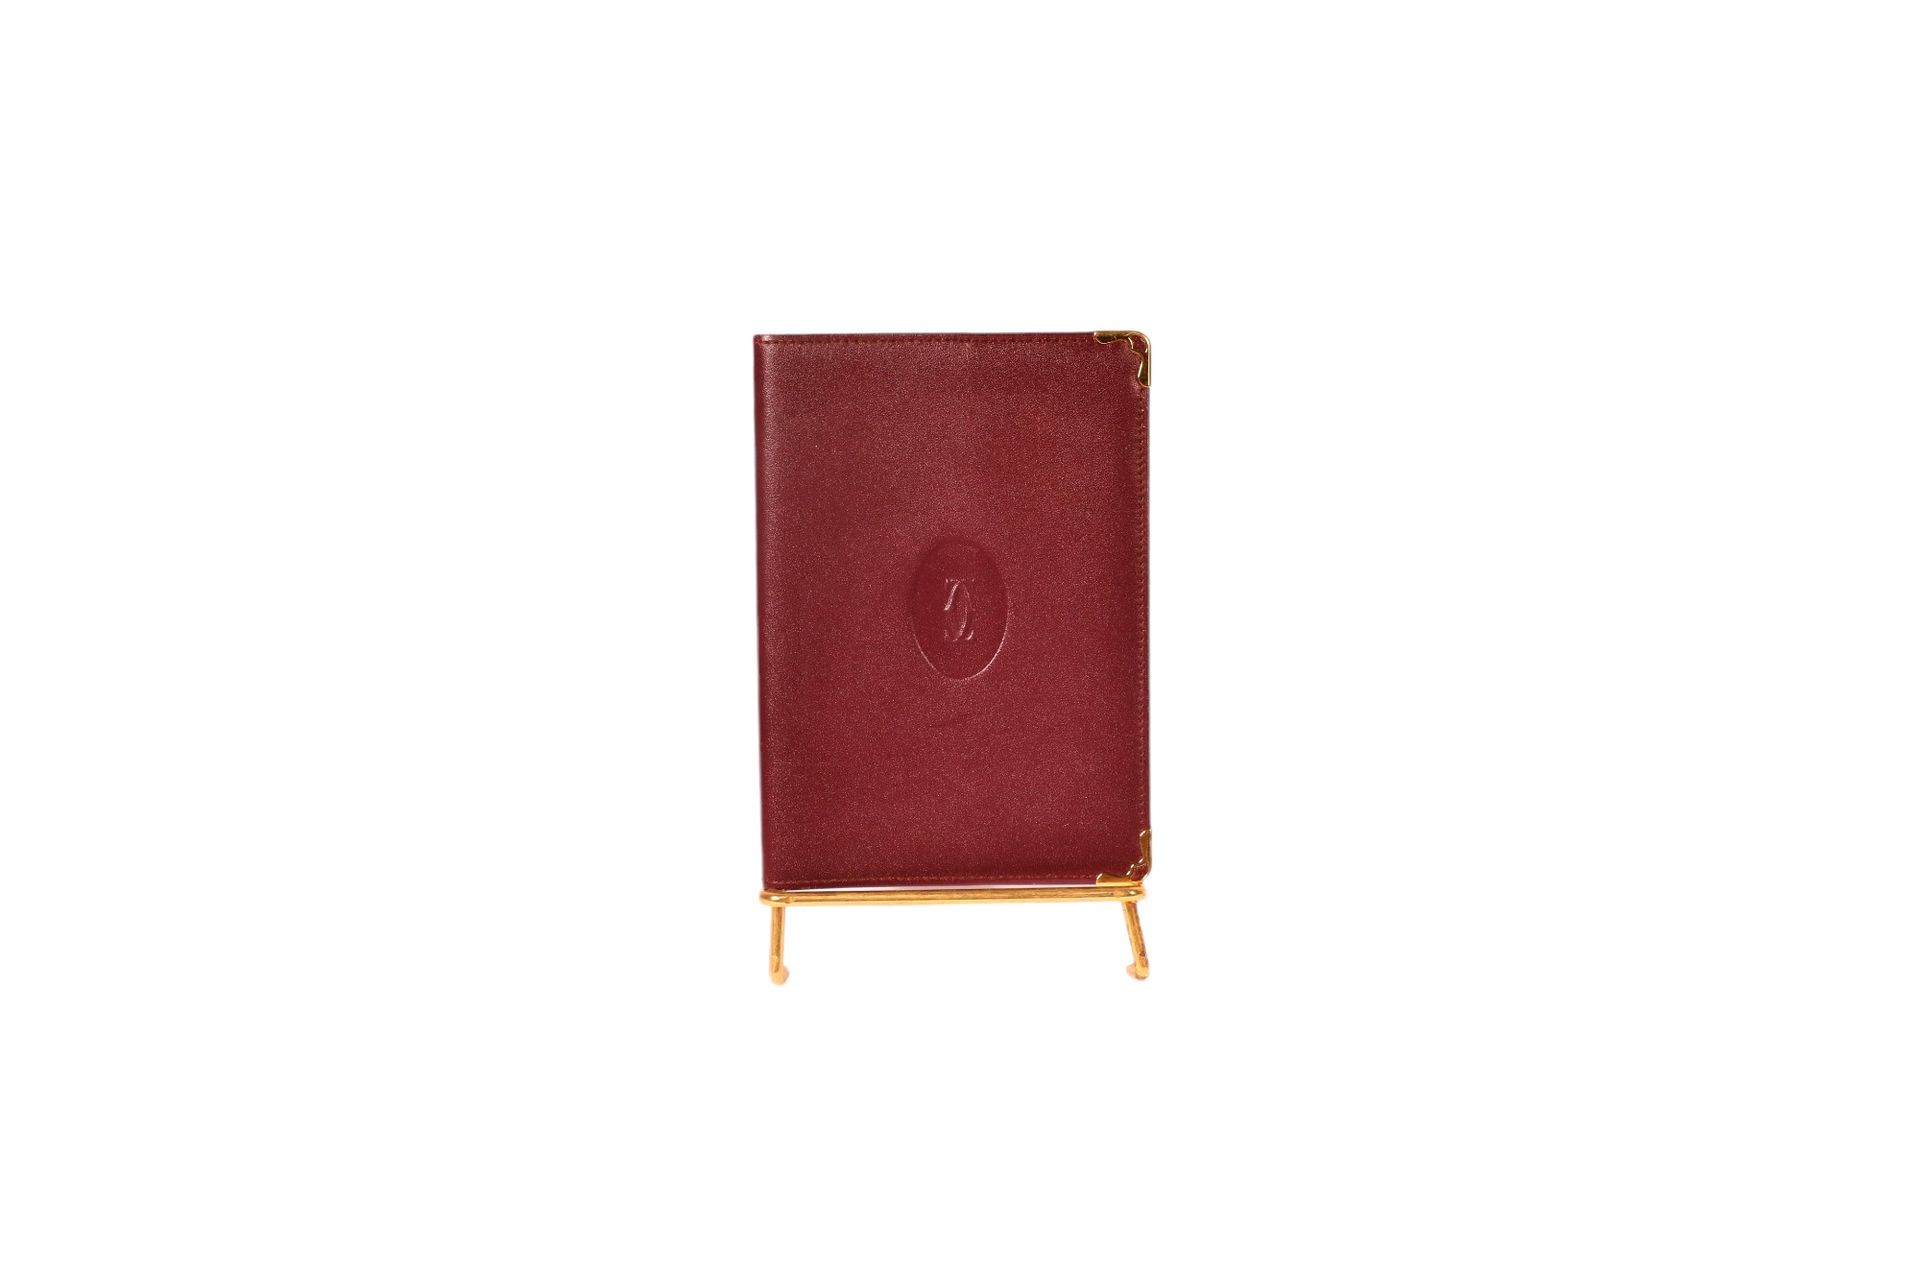 Null * Cartier paris

棕色盒子里的护照尺寸封面，镀金金属角

14 x 10 cm